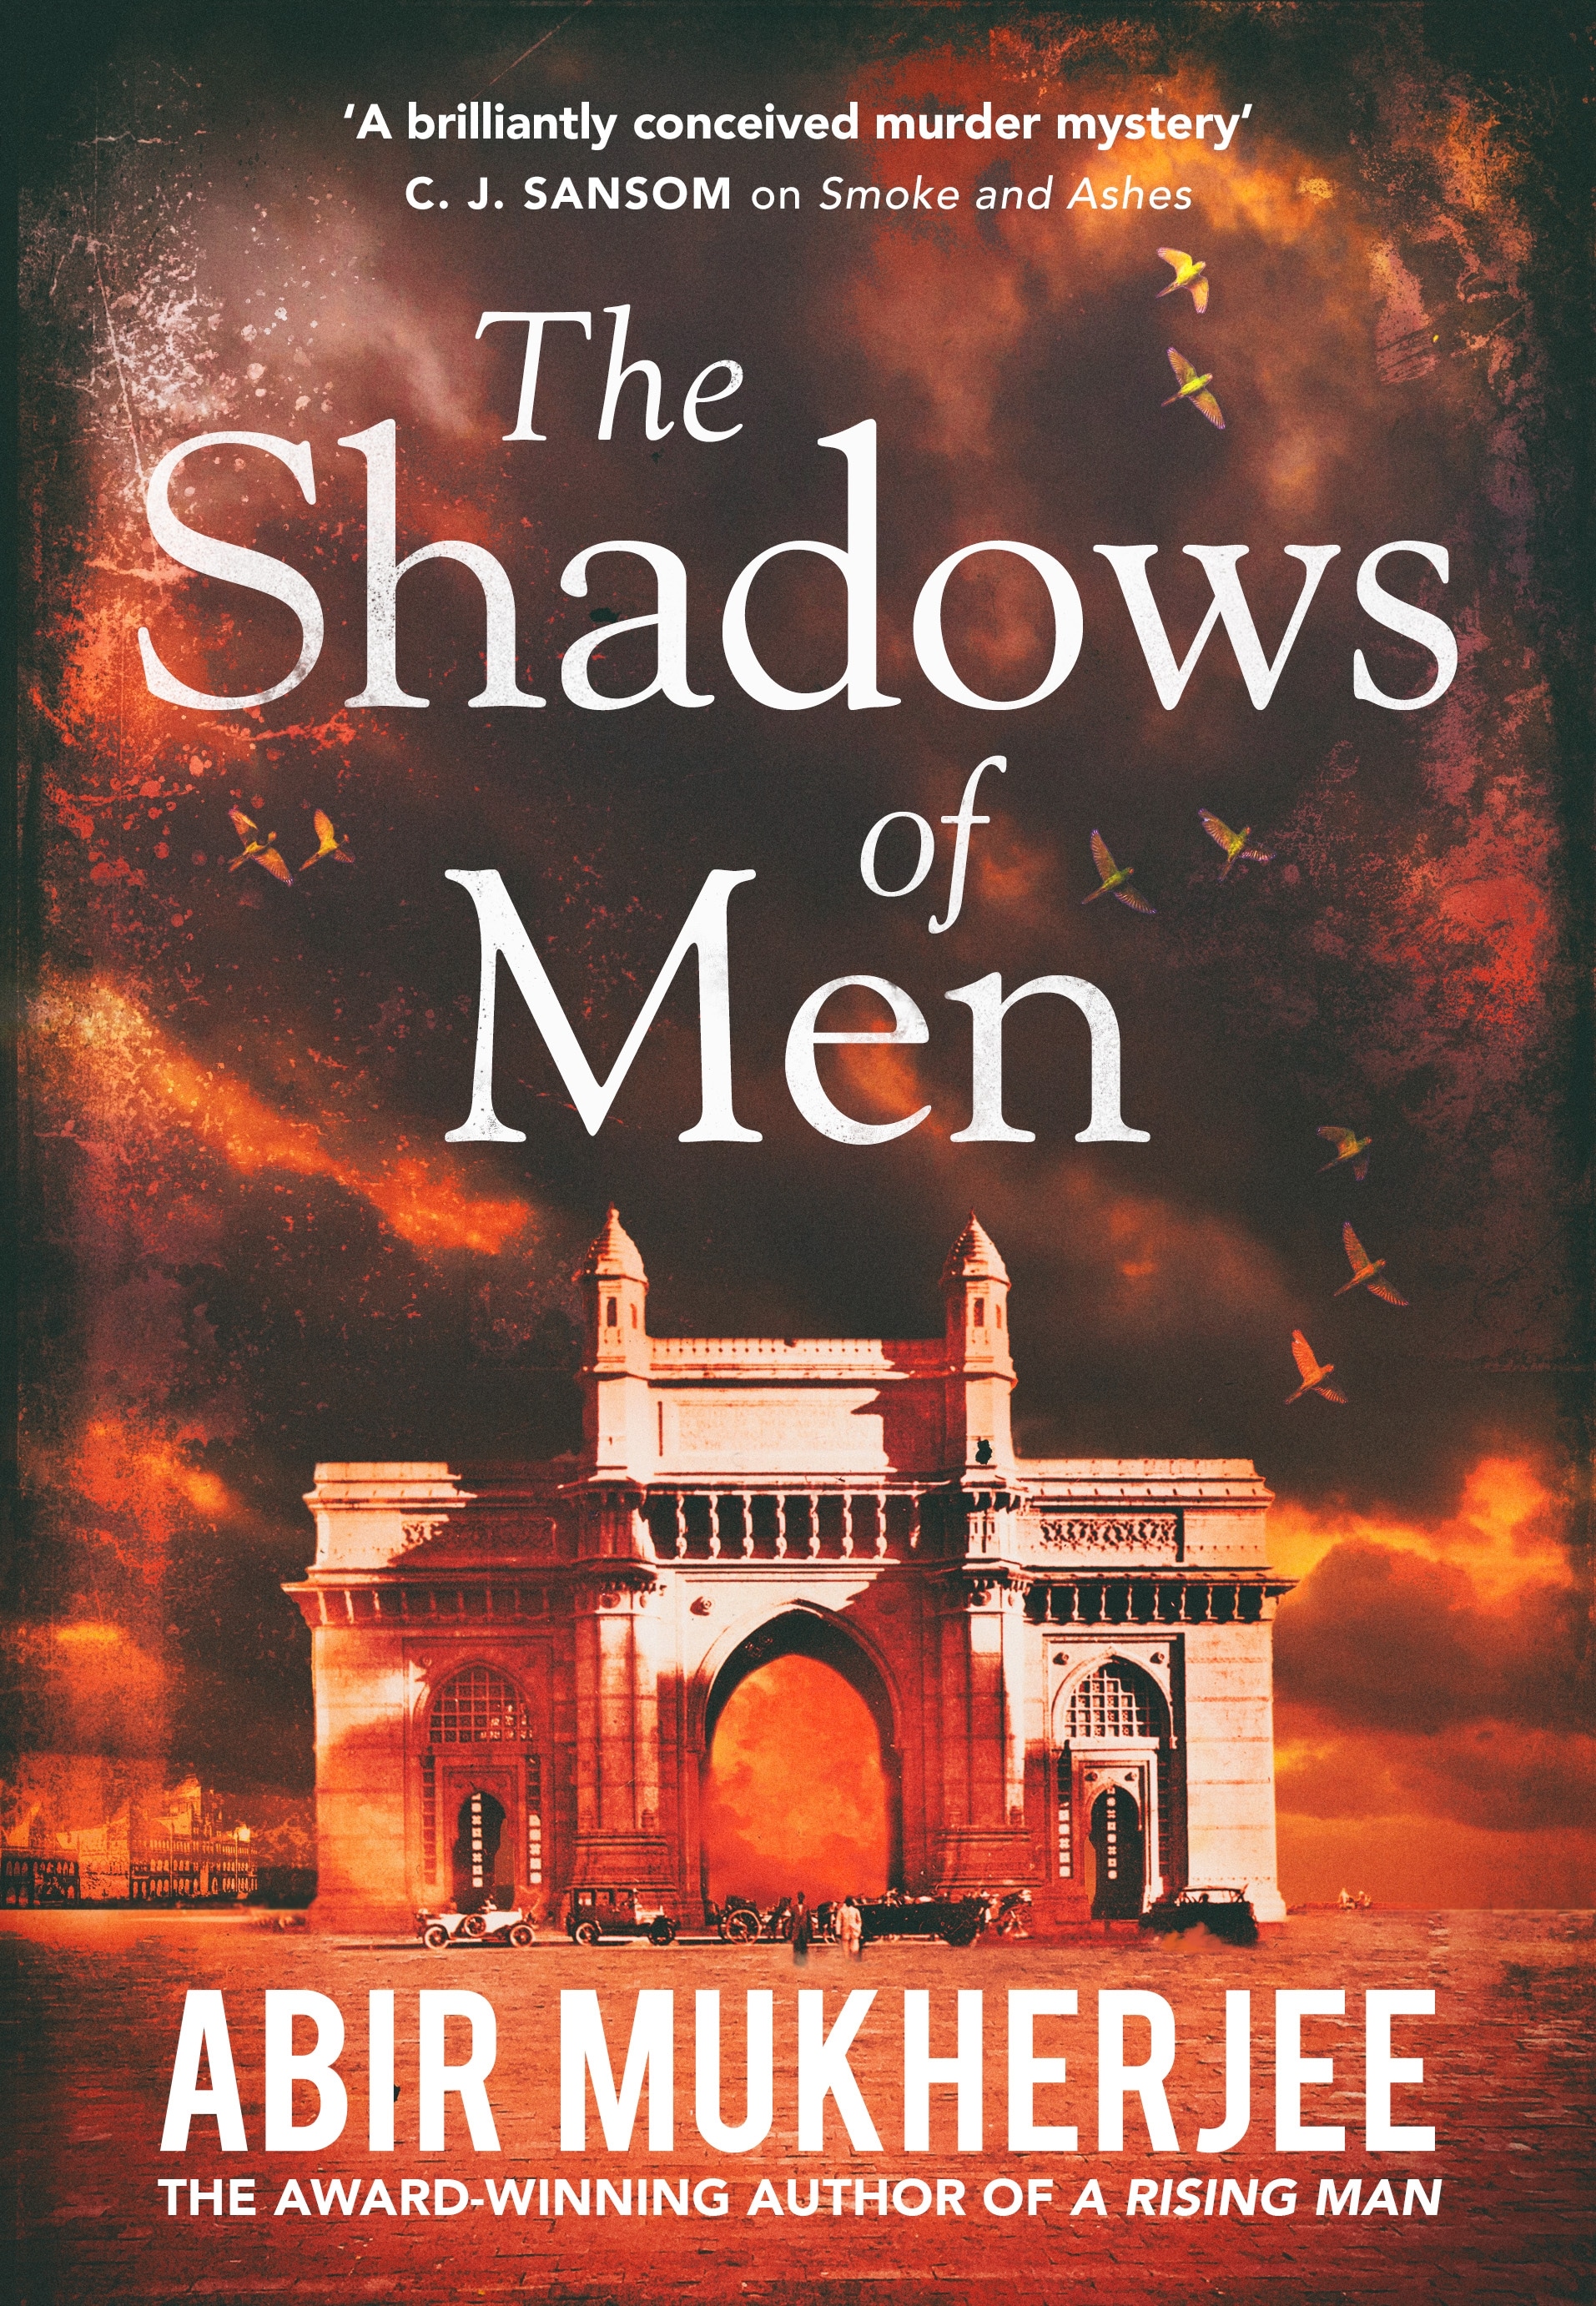 Book “The Shadows of Men” by Abir Mukherjee — November 11, 2021